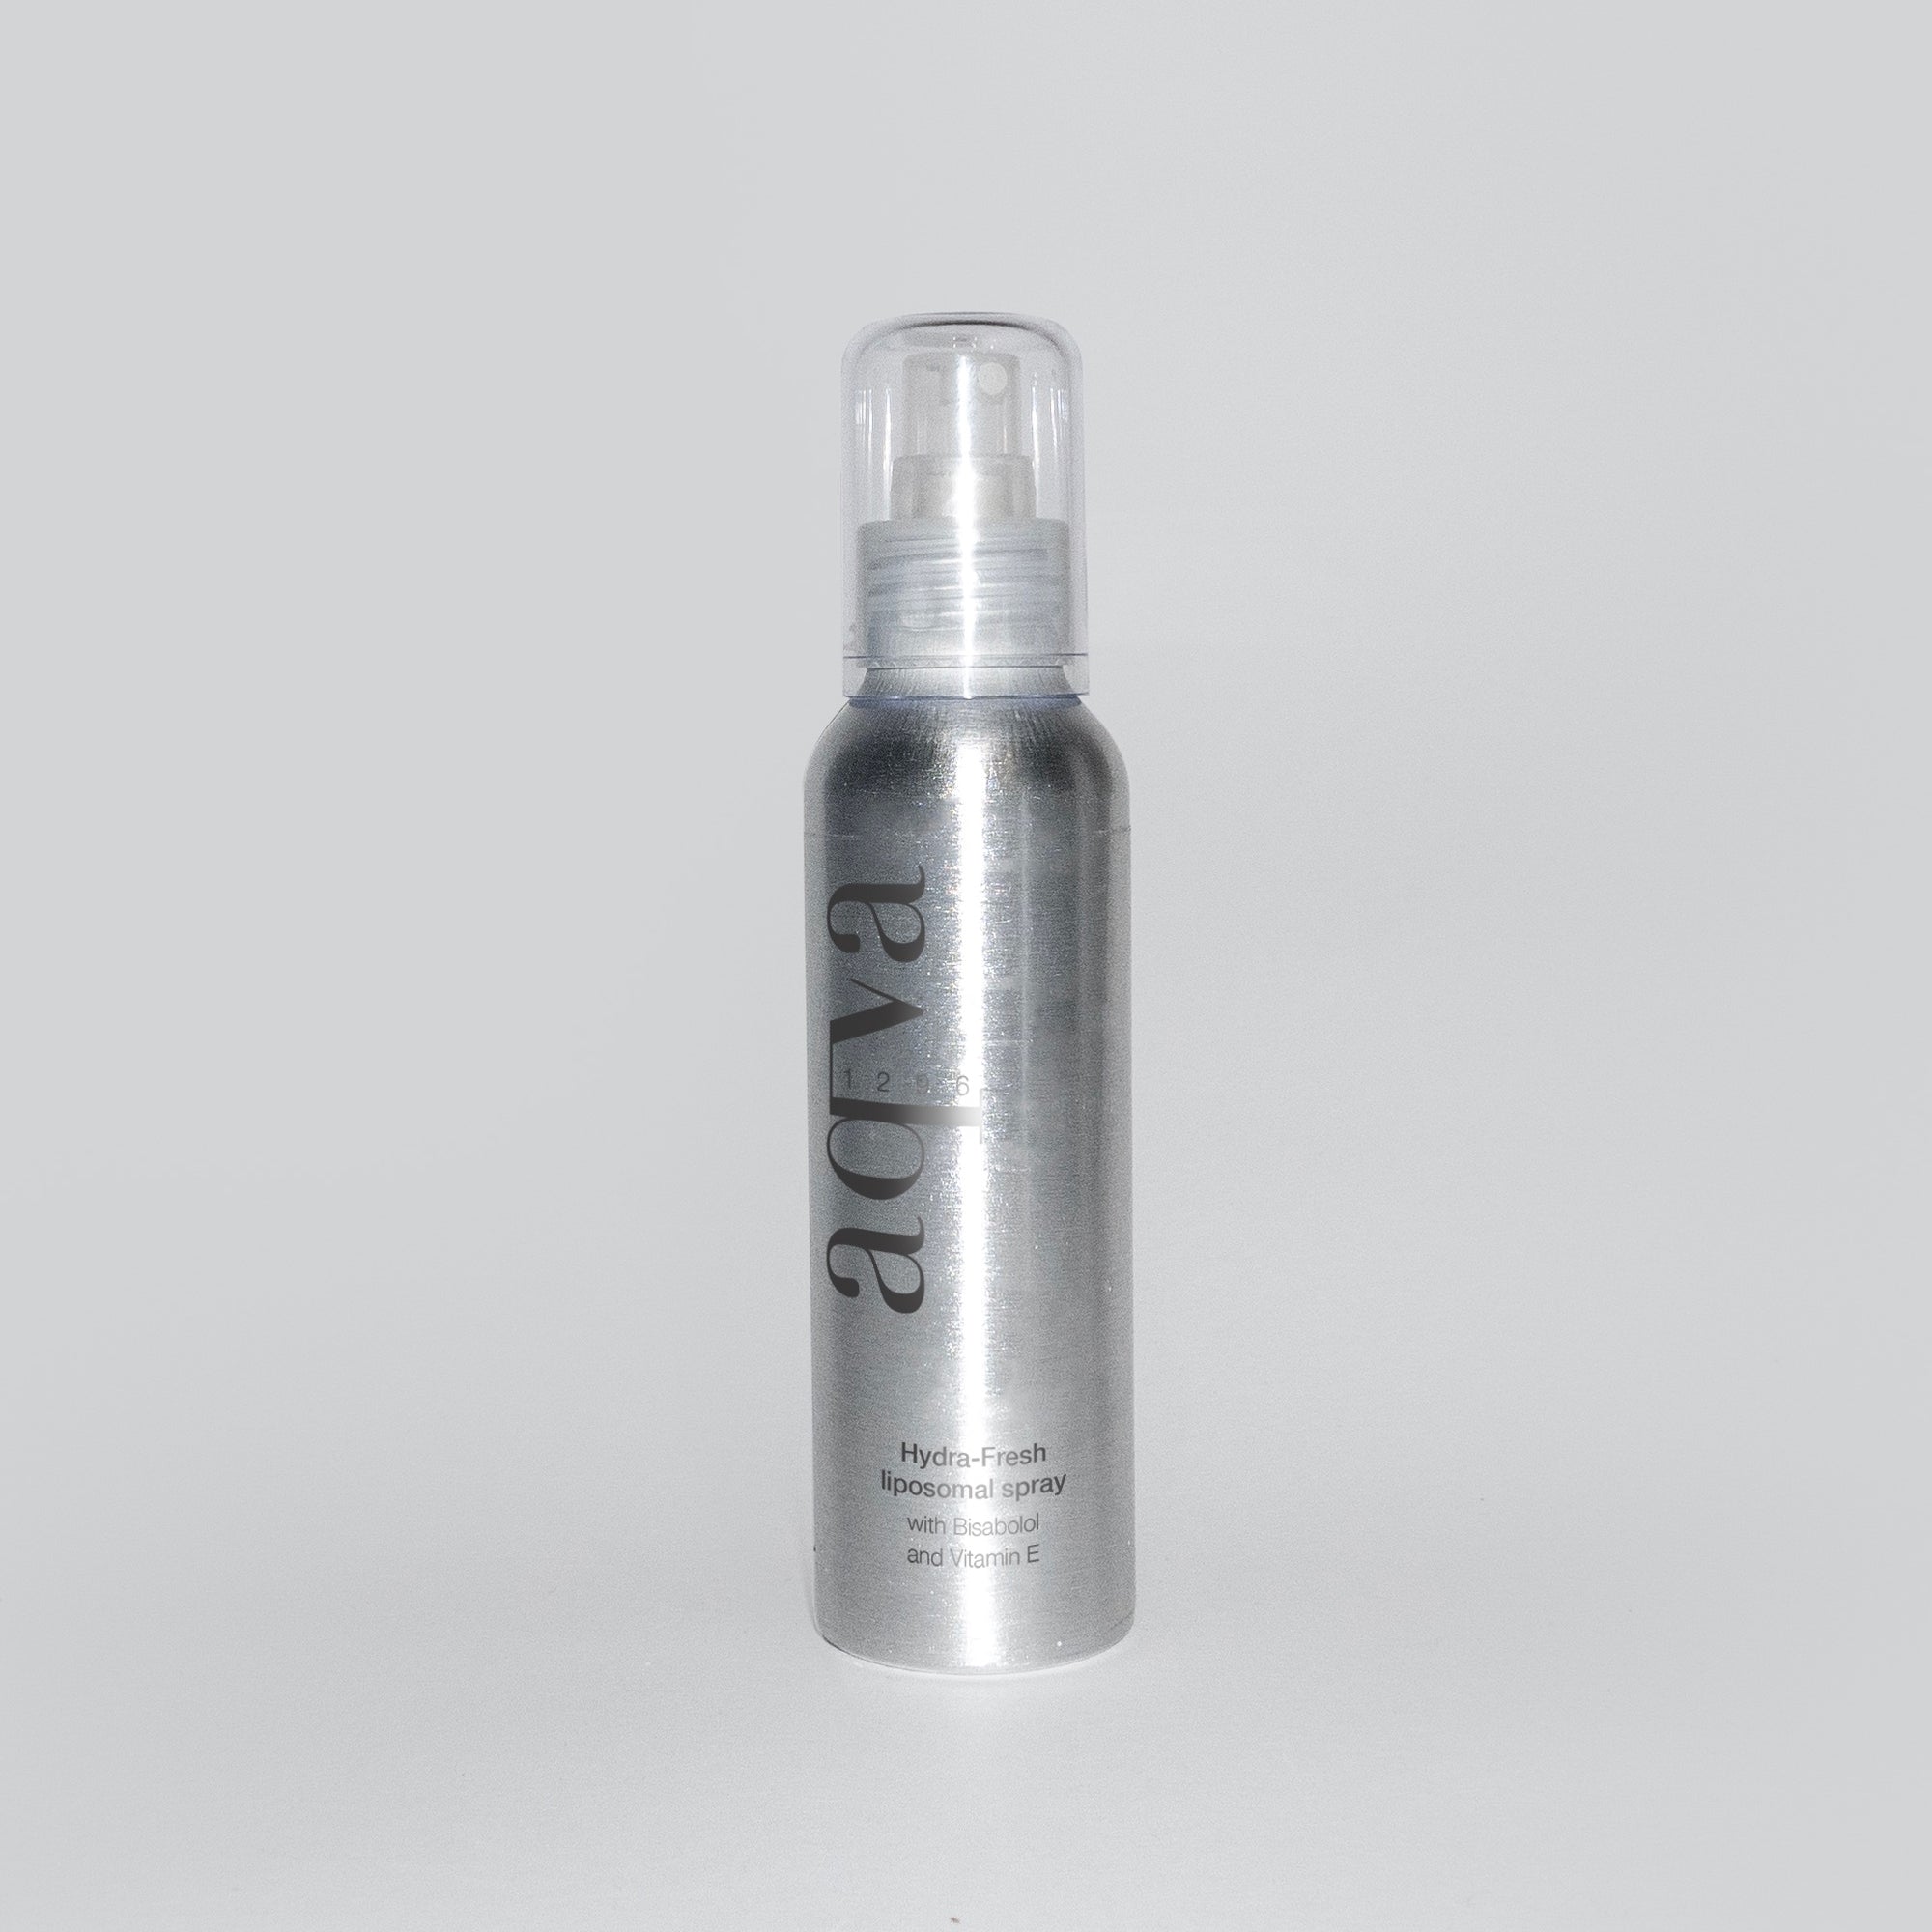 Aqva1296 - Hydra-fresh liposomal spray - LaVit Collection